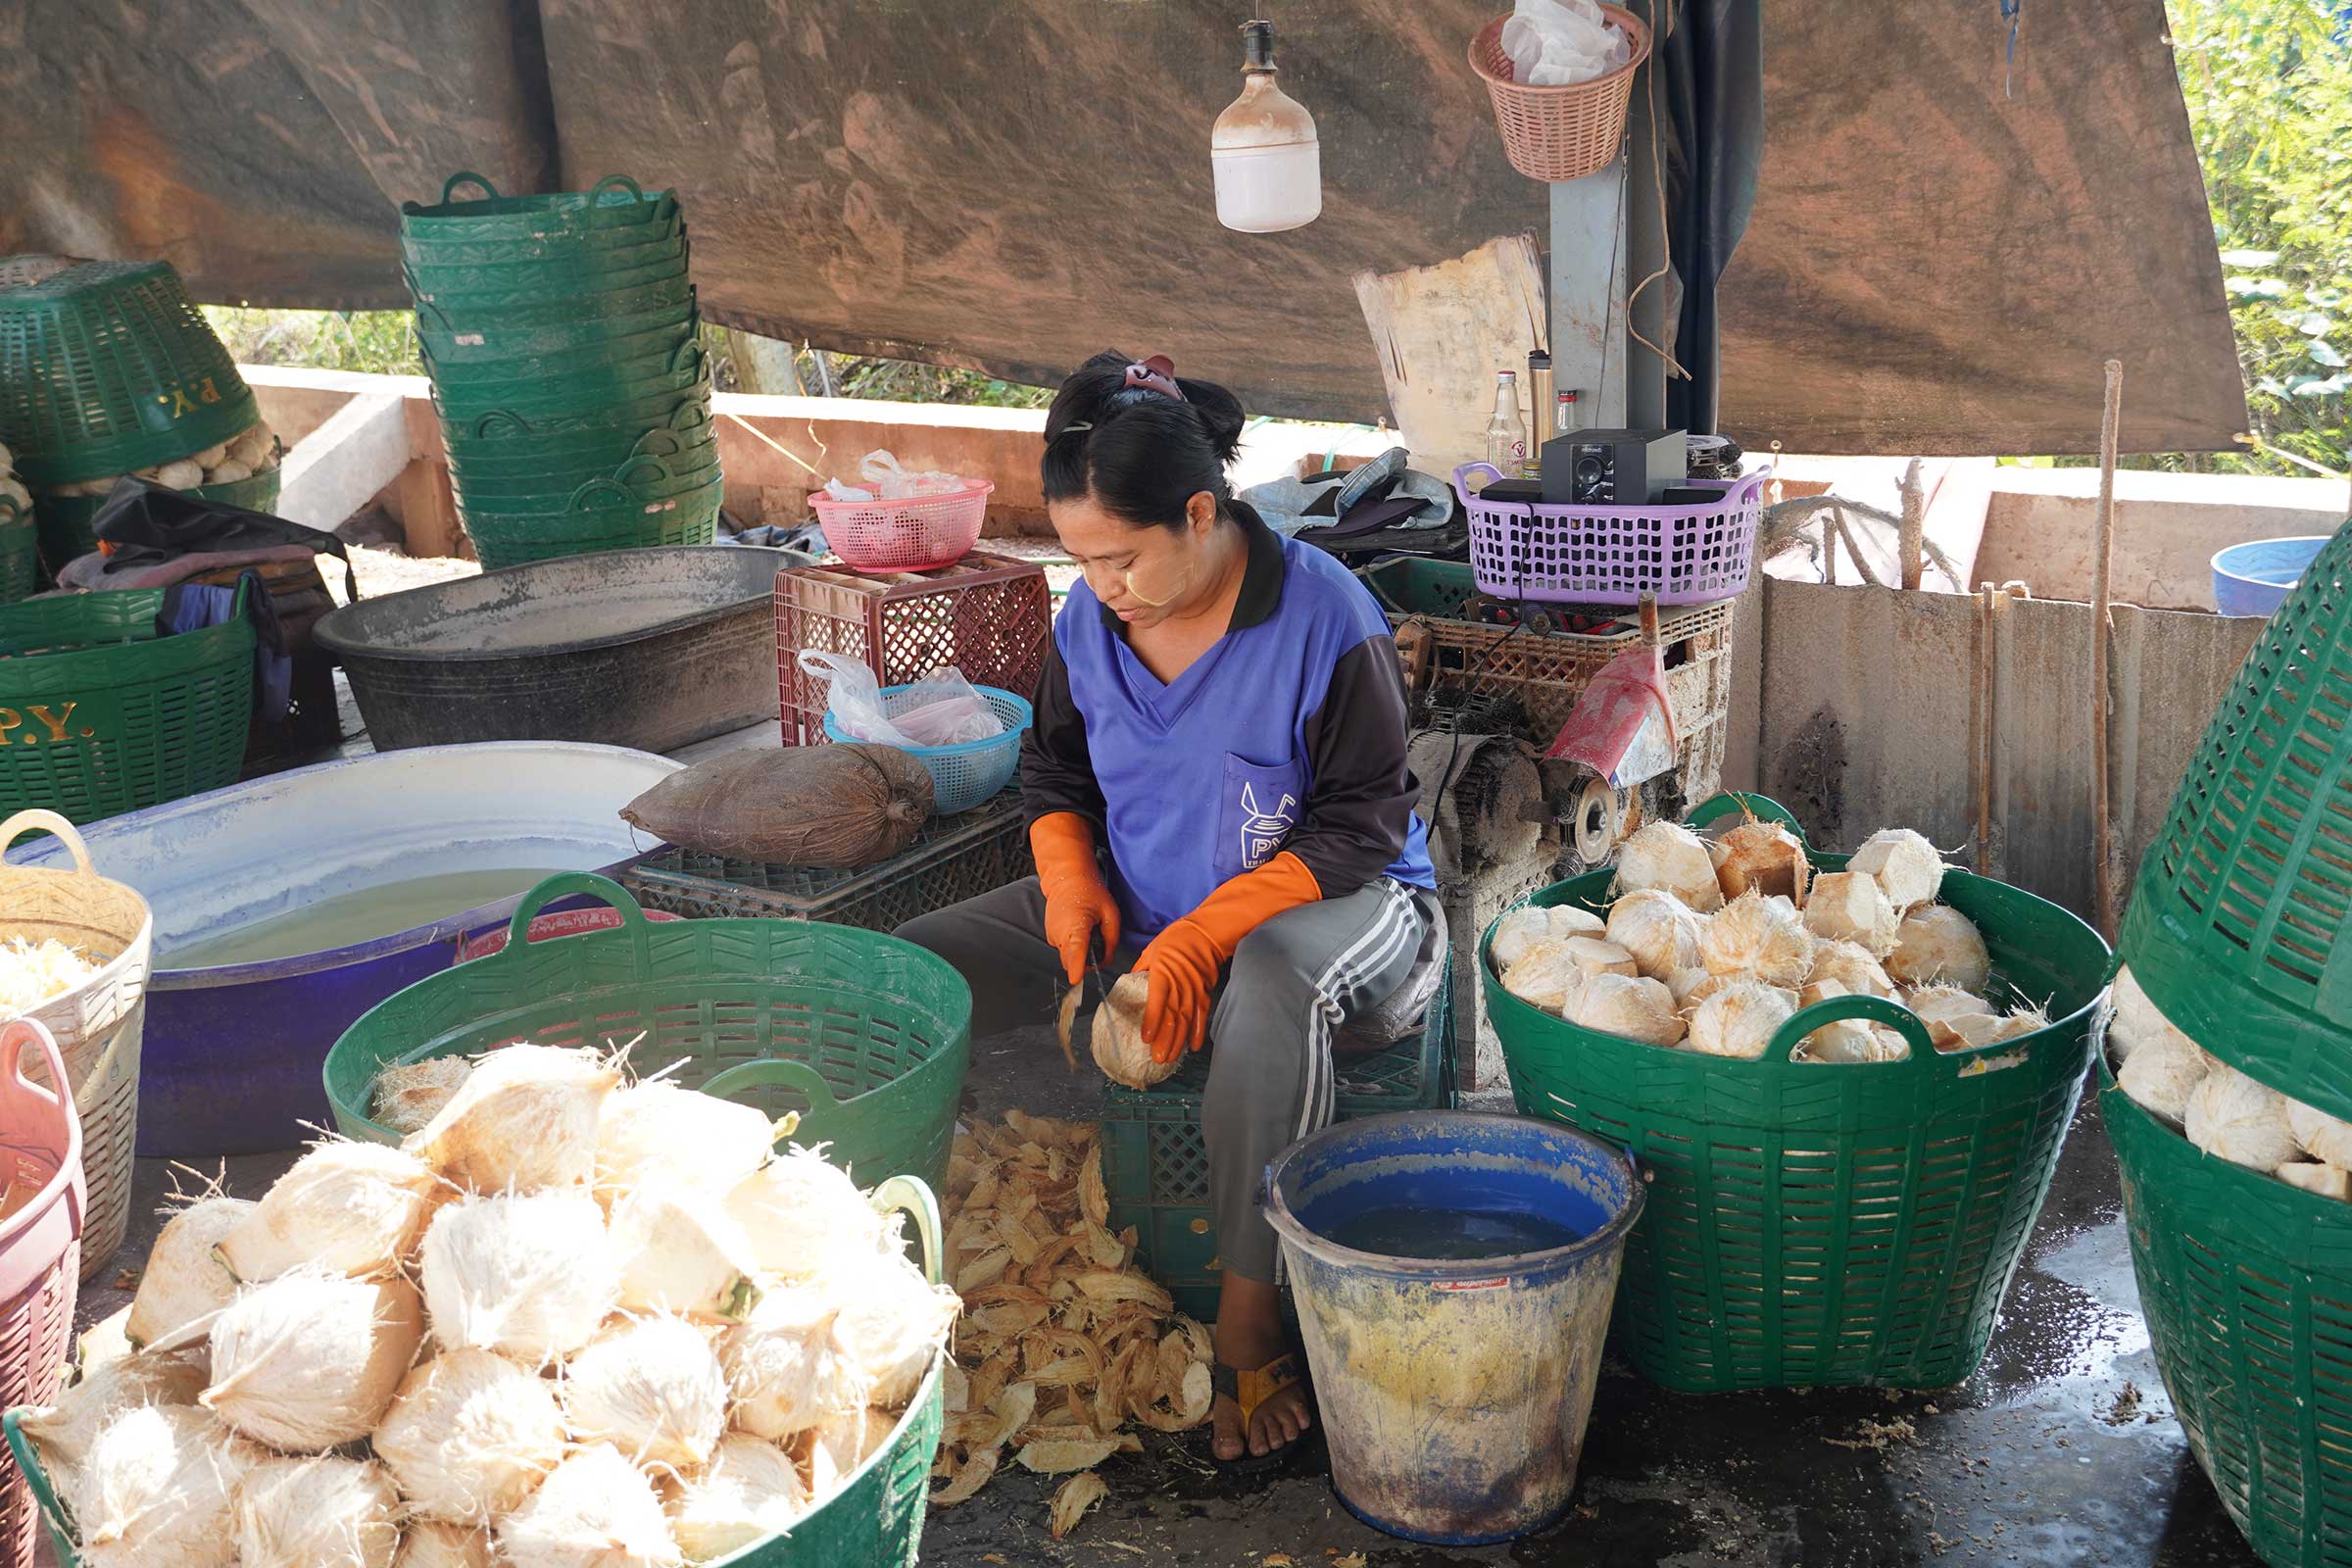 Coconut husks and shells are major waste from coconut farming. (กากมะพร้าวและกะลามะพร้าวจำนวนมากที่เหลือจากการจัดการสวนมะพร้าว)